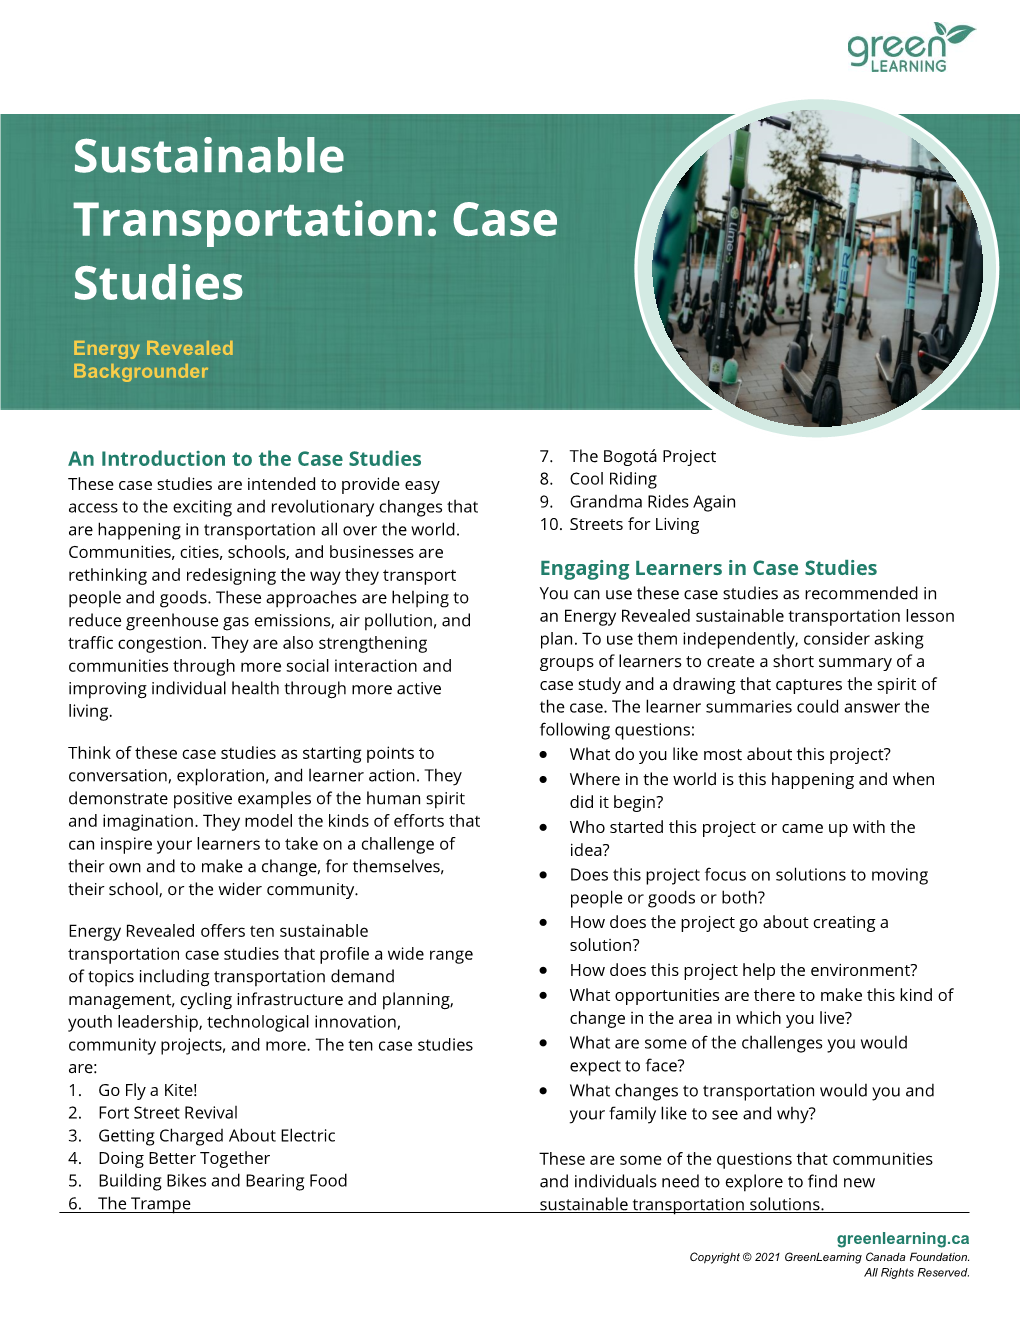 Sustainable Transportation: Case Studies